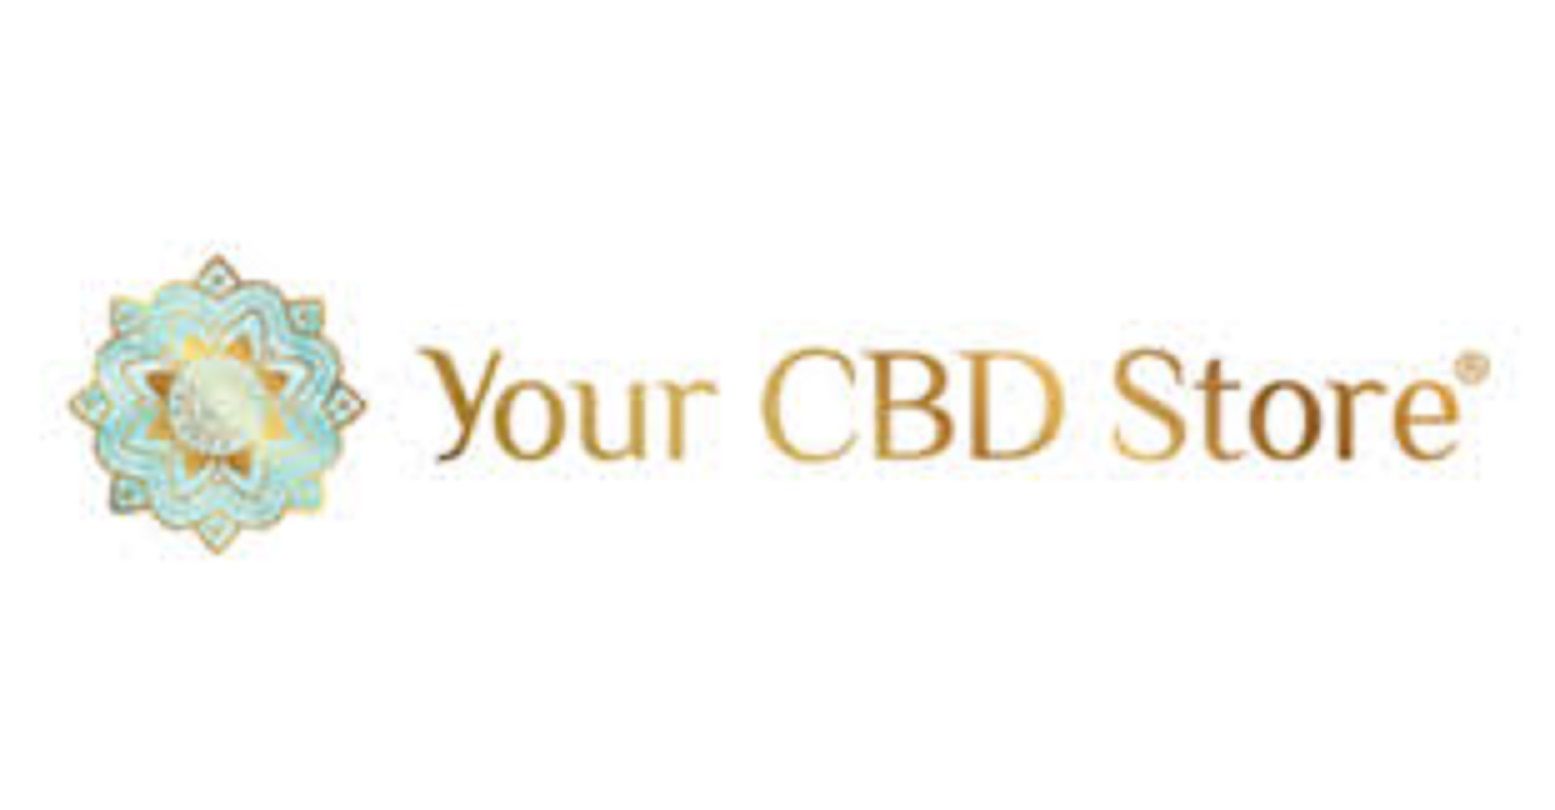 Your CBD Stores Franchising LLC